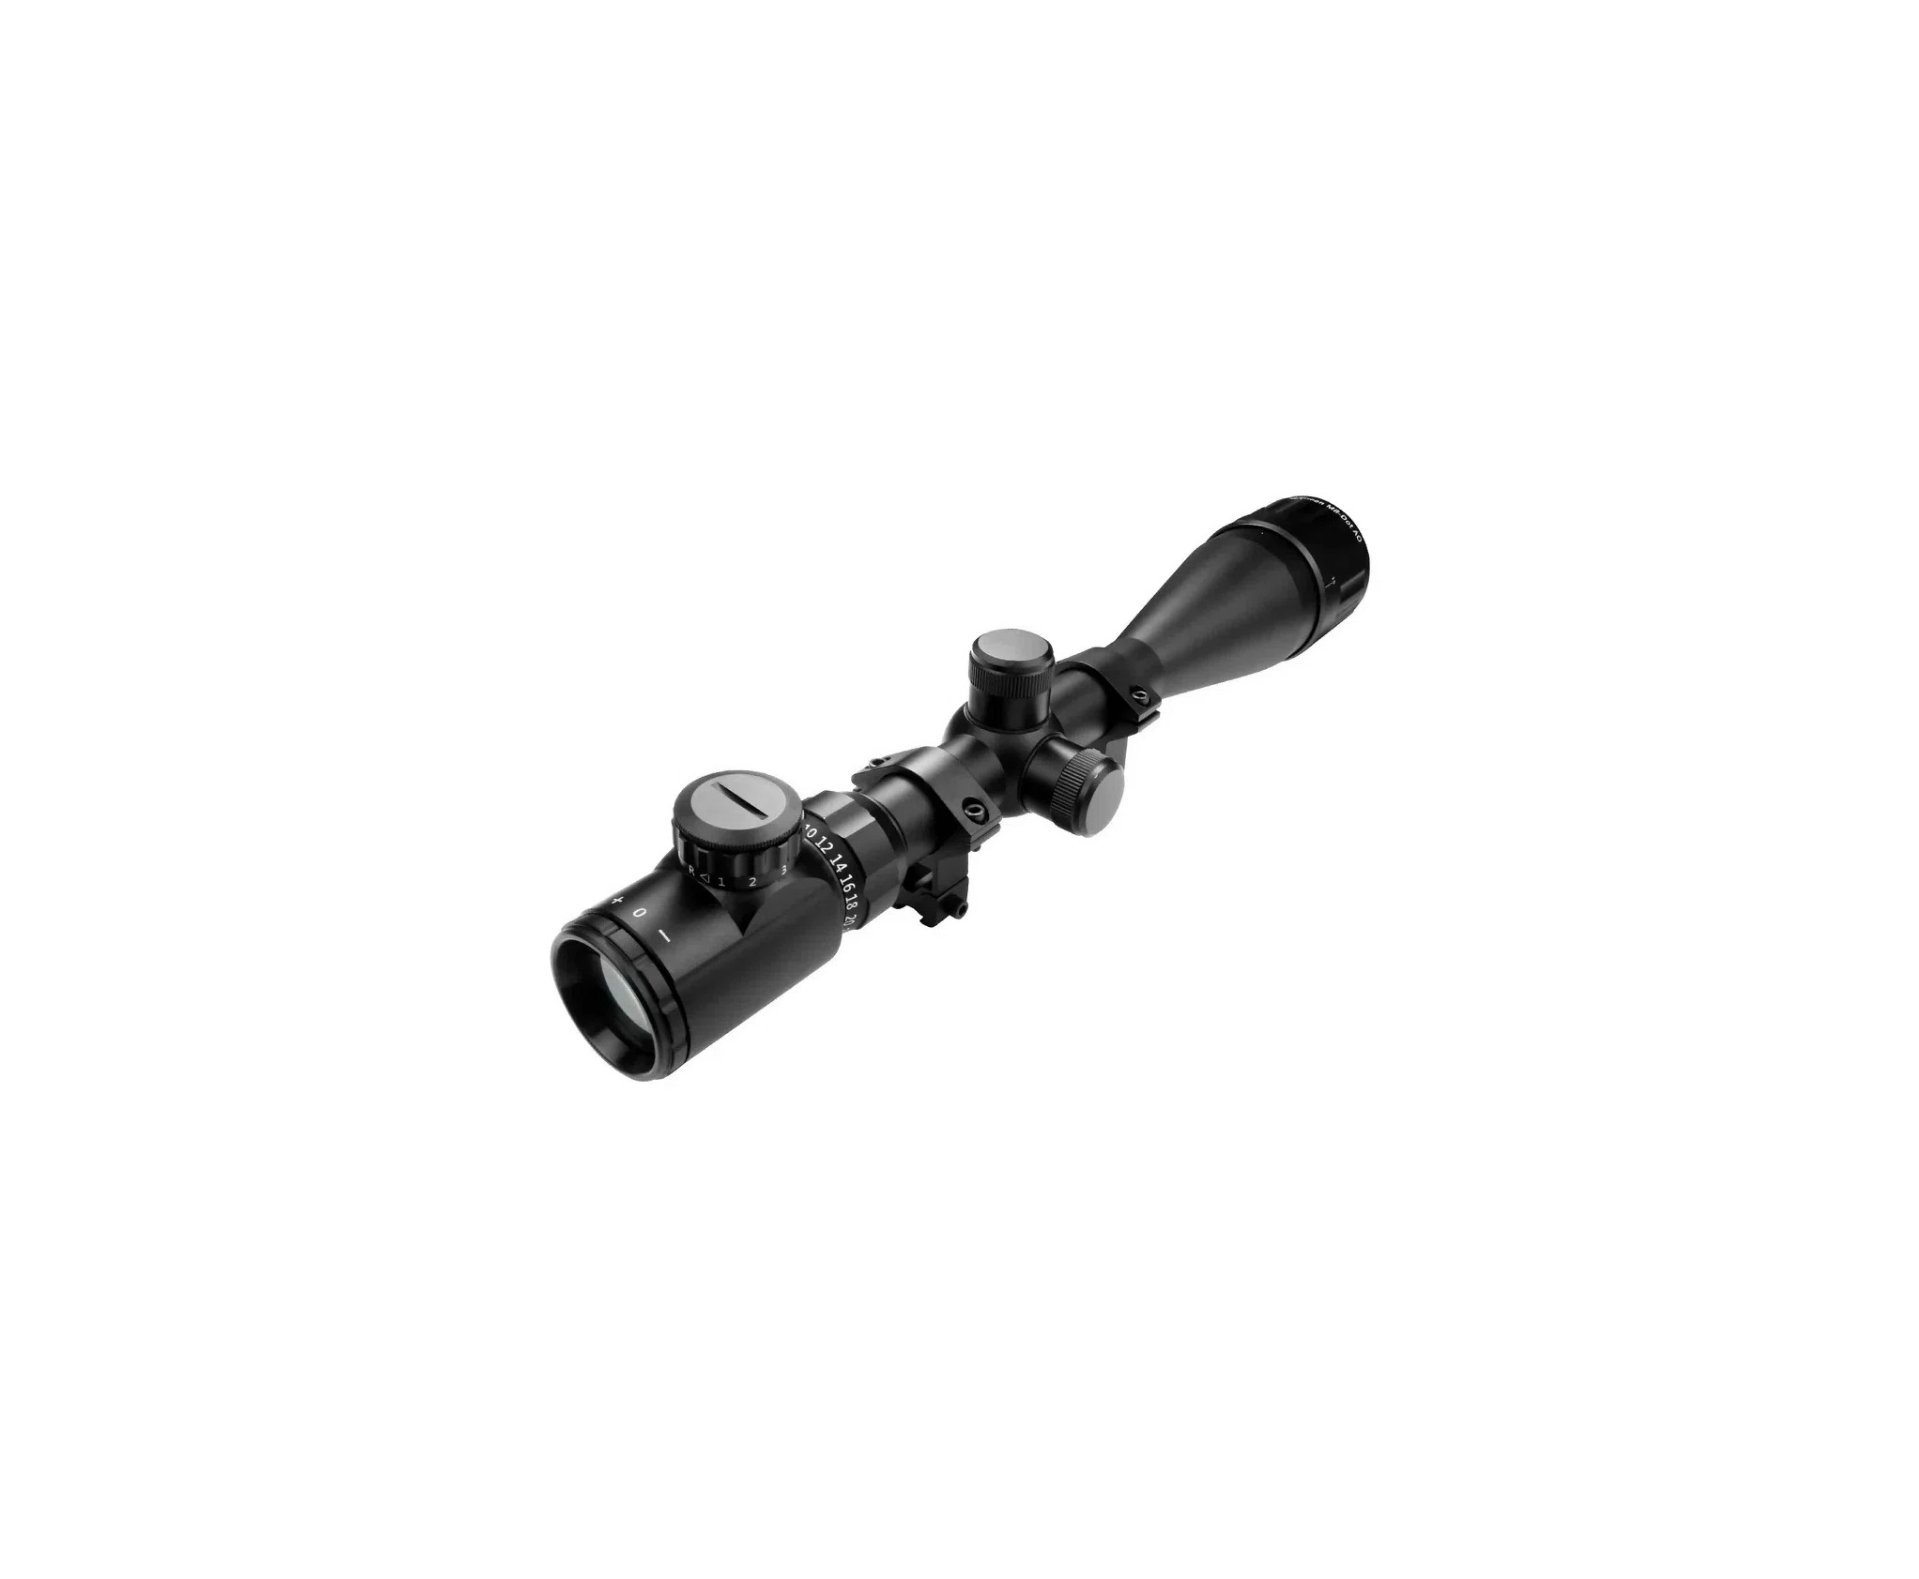 Carabina de Pressão PCP M25 Thunder Black 6.35mm .25 Artemis FXR + Luneta 6-24x50 + Bomba + Mount 22mm